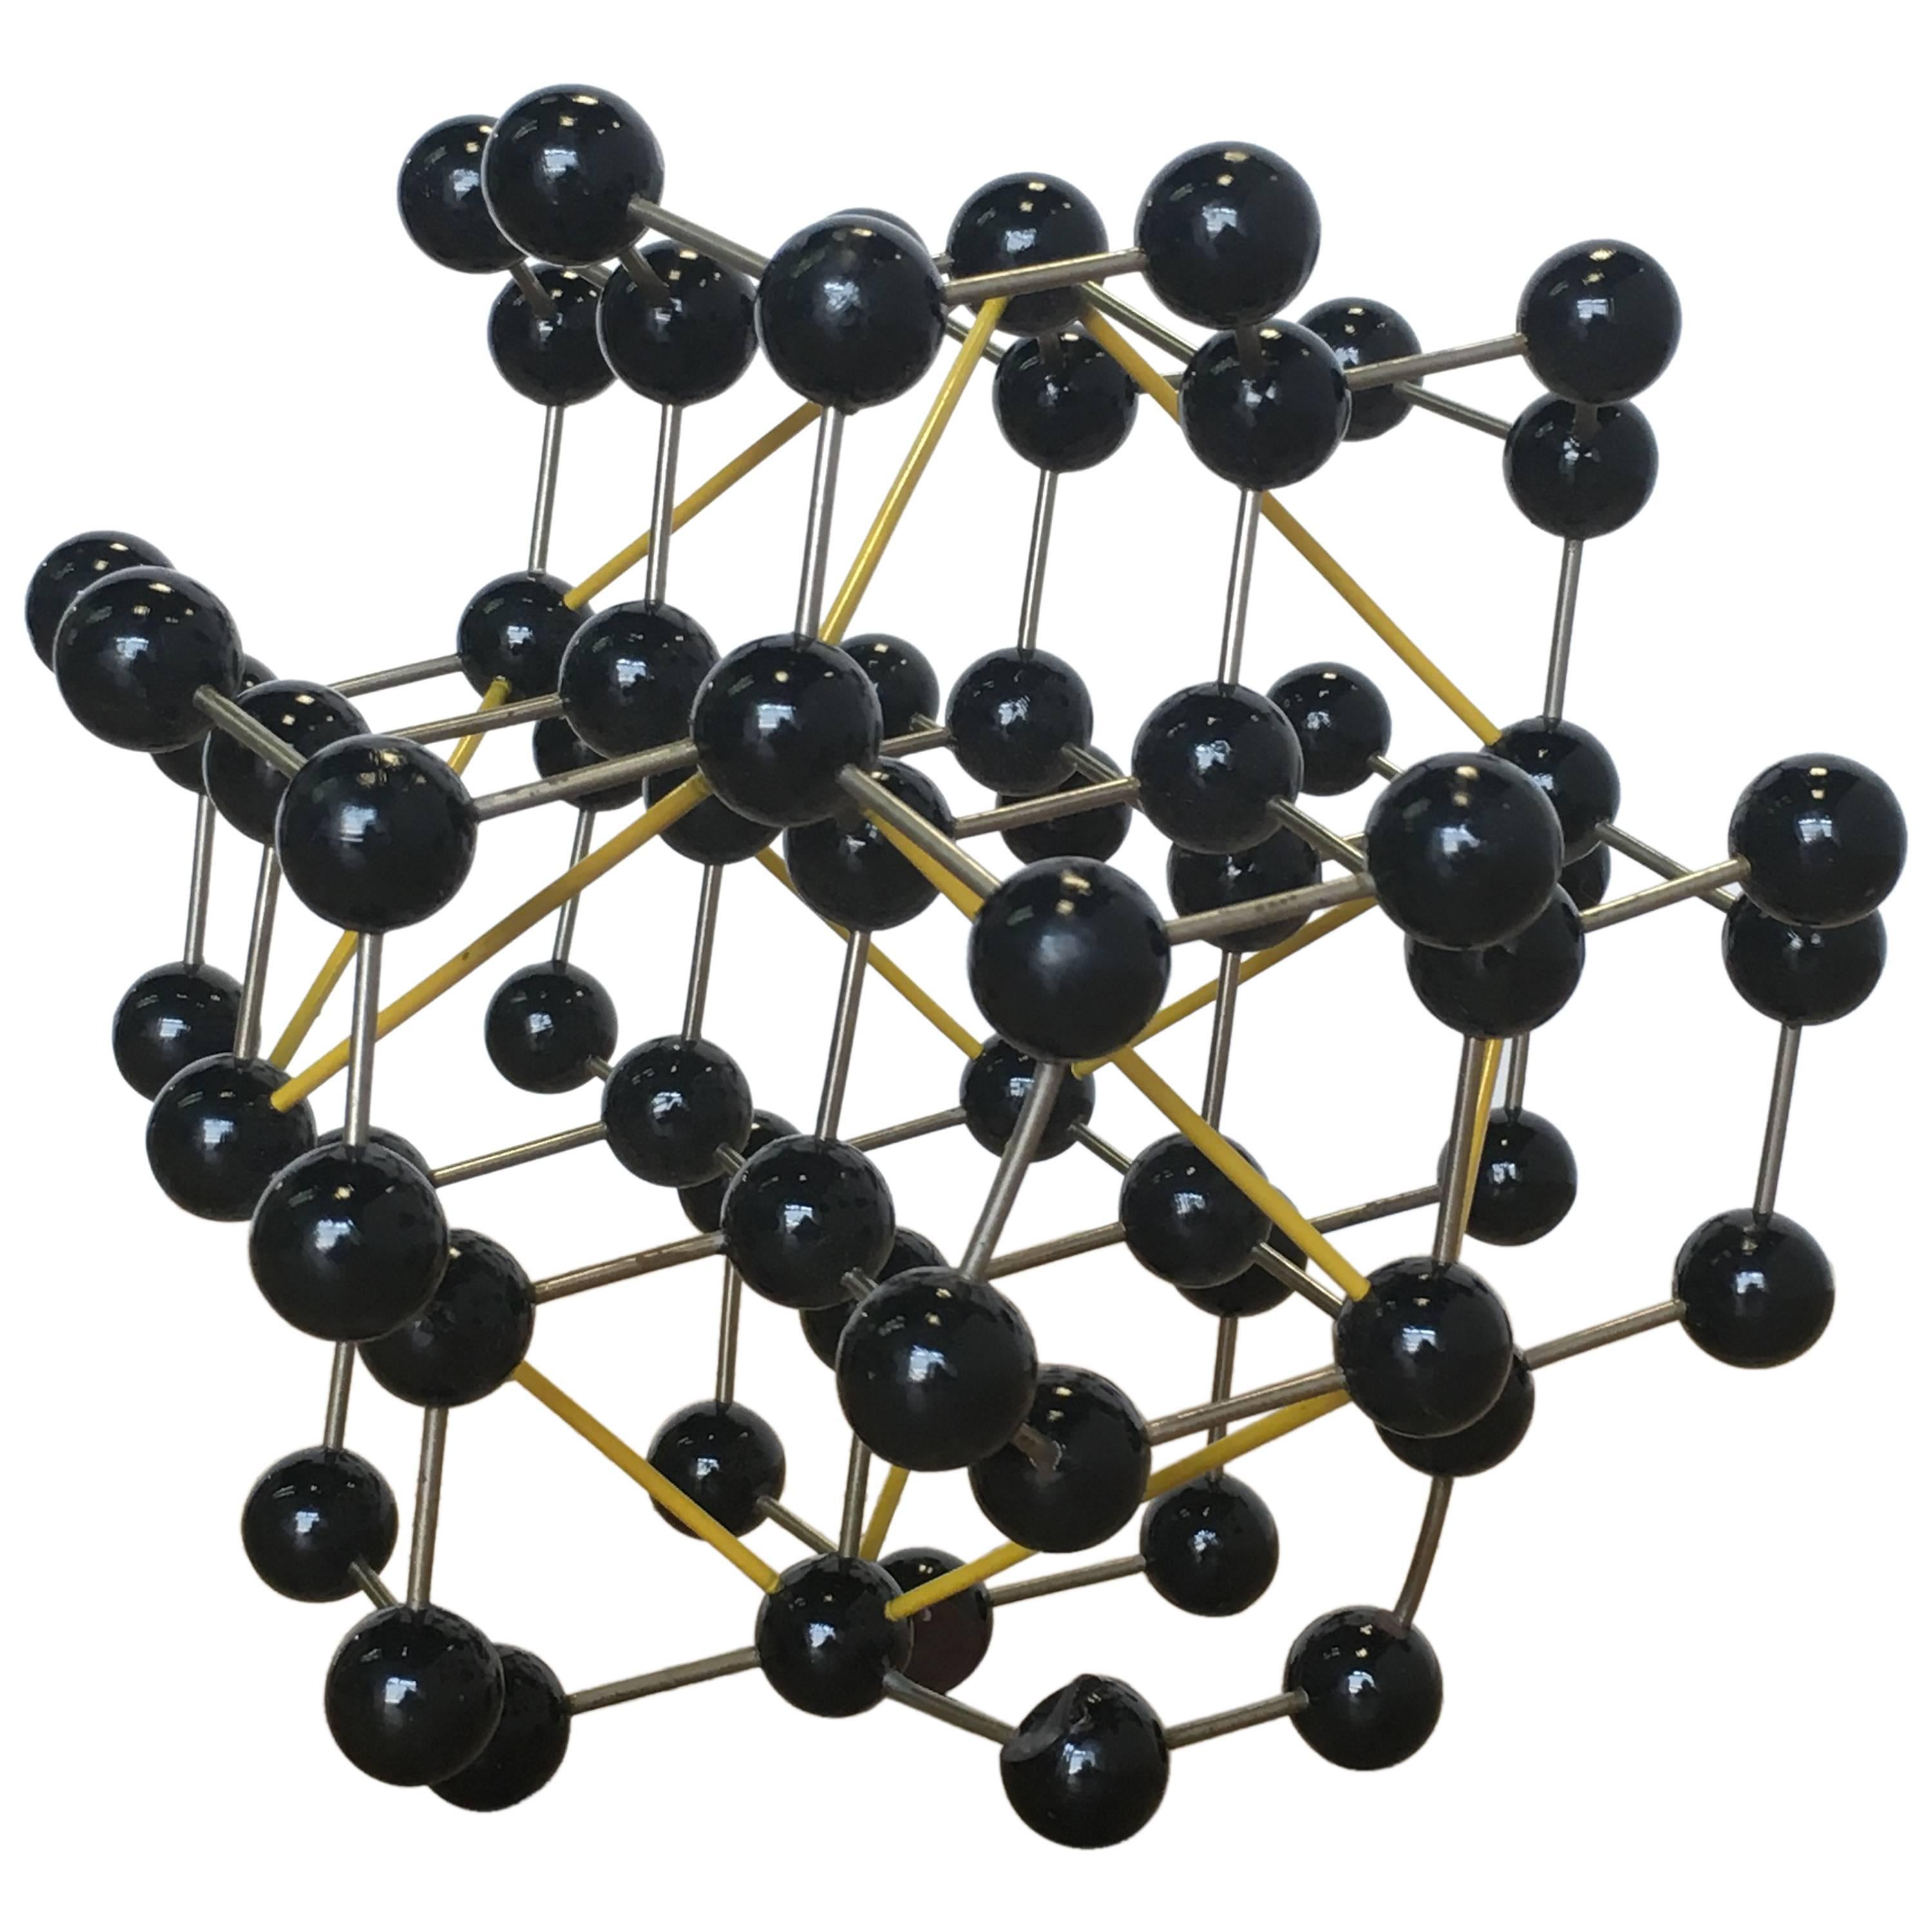 Vintage Ball and Stick Molecular Model of Diamond